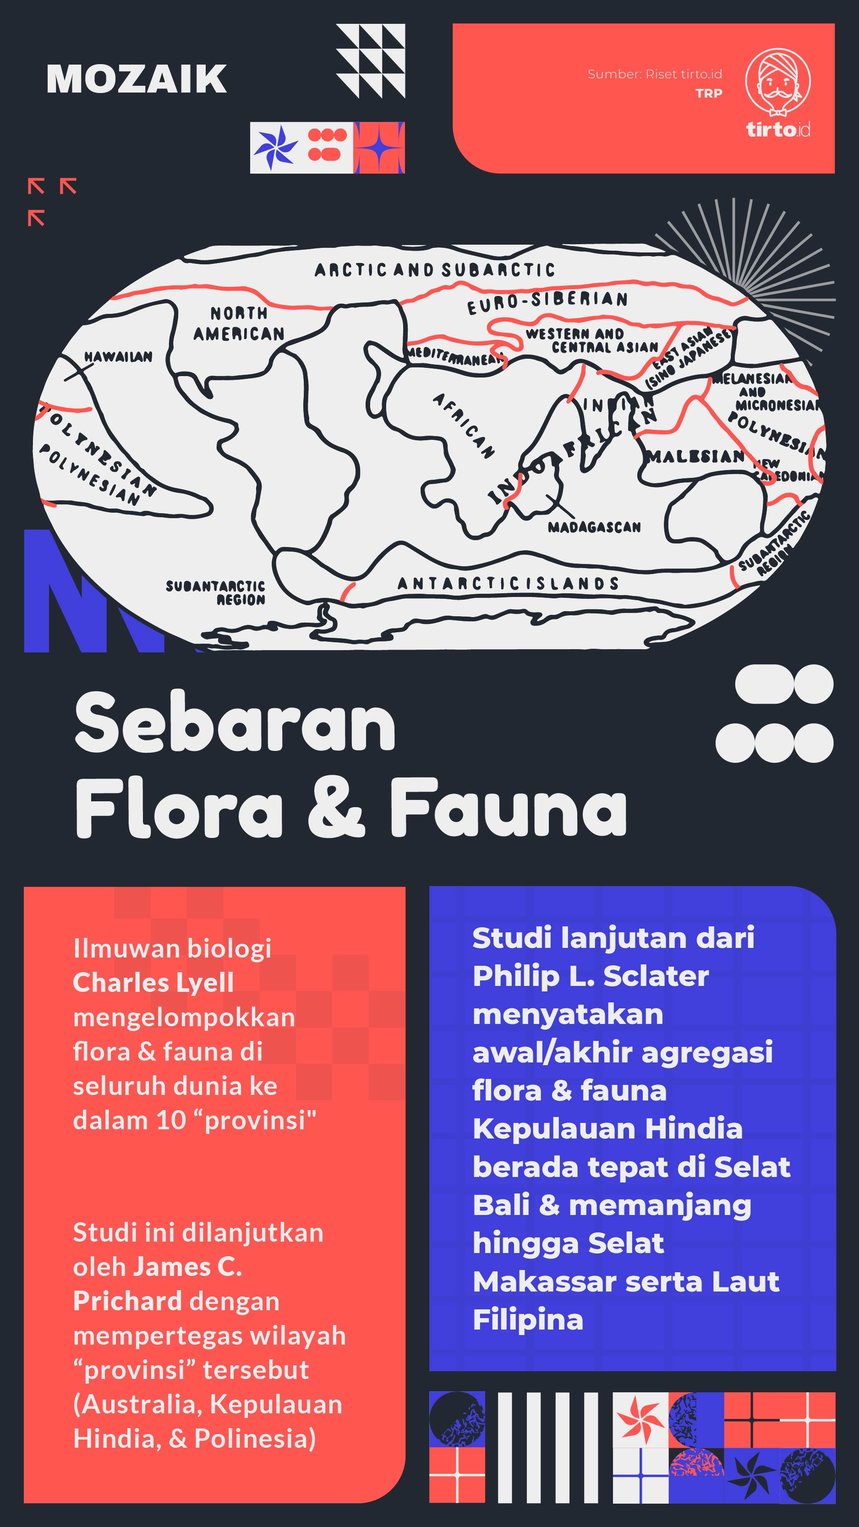 Infografik Mozaik Sebaran Flora dan Fauna